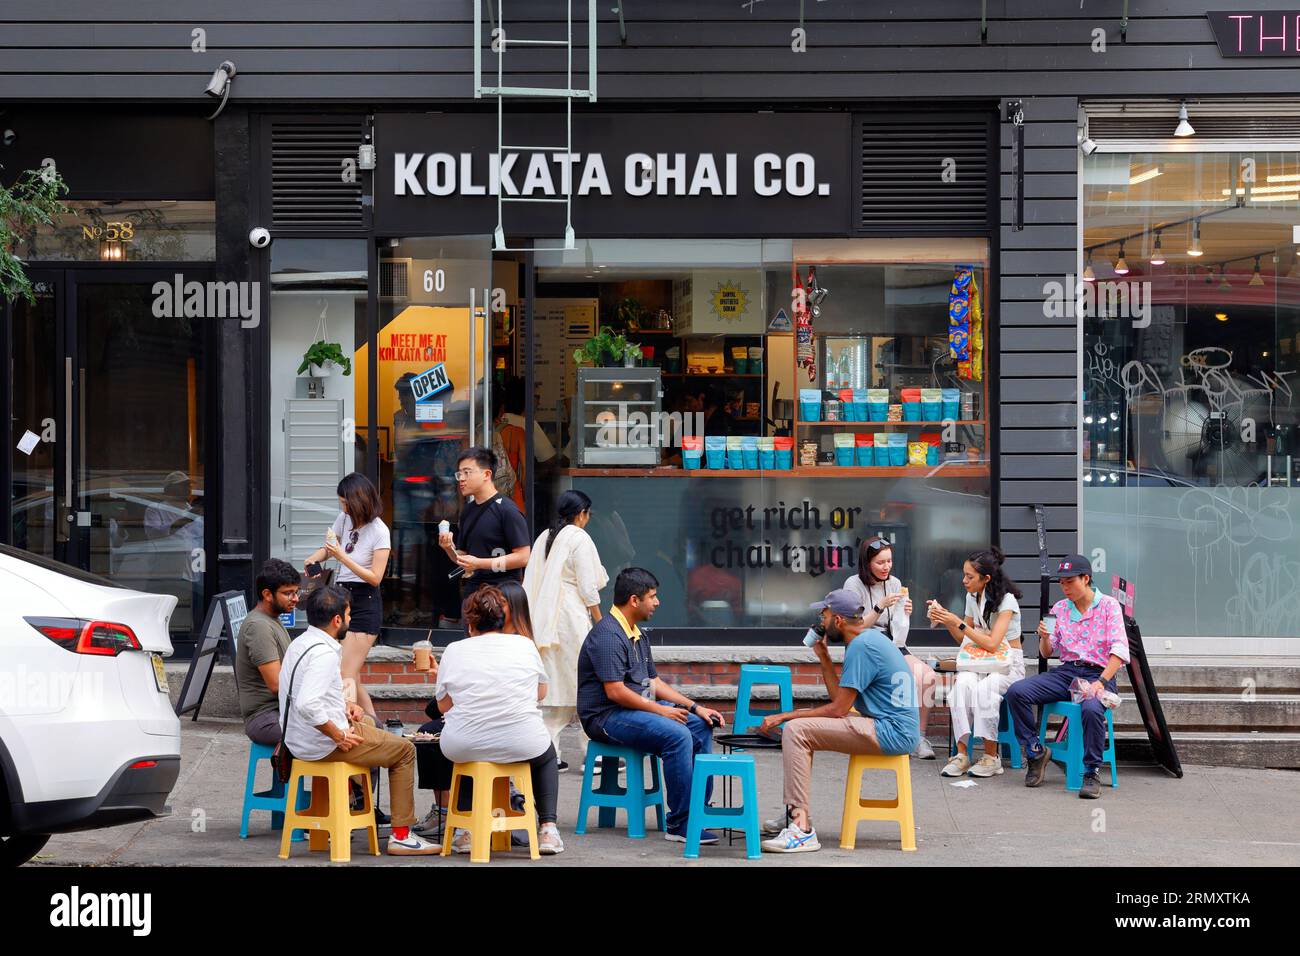 Kolkata Chai Co, 60 Kenmare St, New York, NYC storefront photo of a South Asian Masala Chai cafe in Manhattan's Nolita neighborhood. Stock Photo